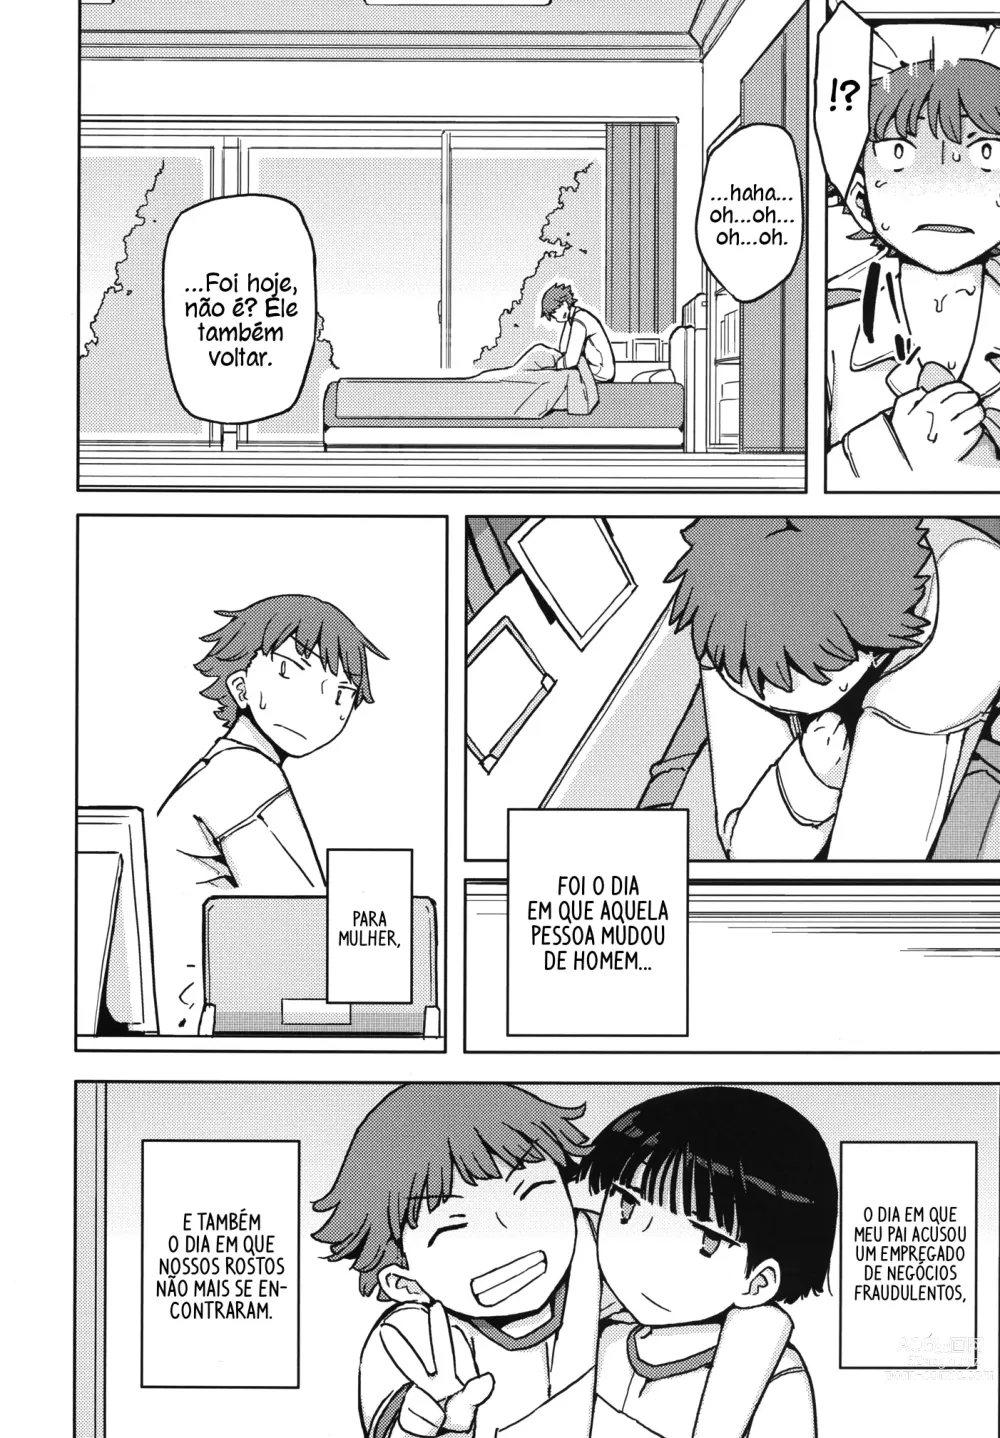 Page 10 of doujinshi TS: Quando Ele se tornou Ela